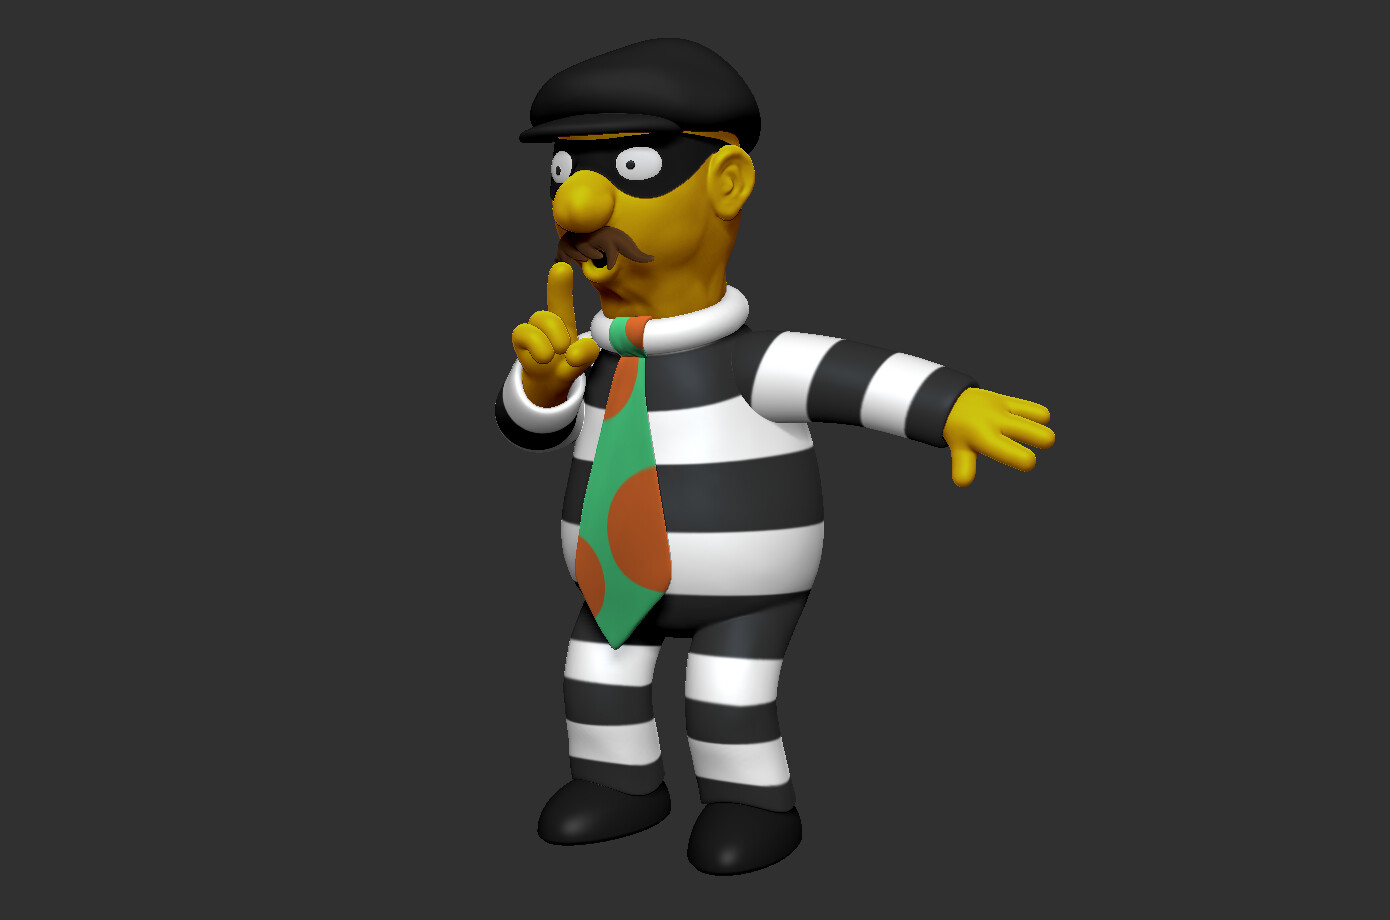 Day 16 Greed - The Krusty Burglar